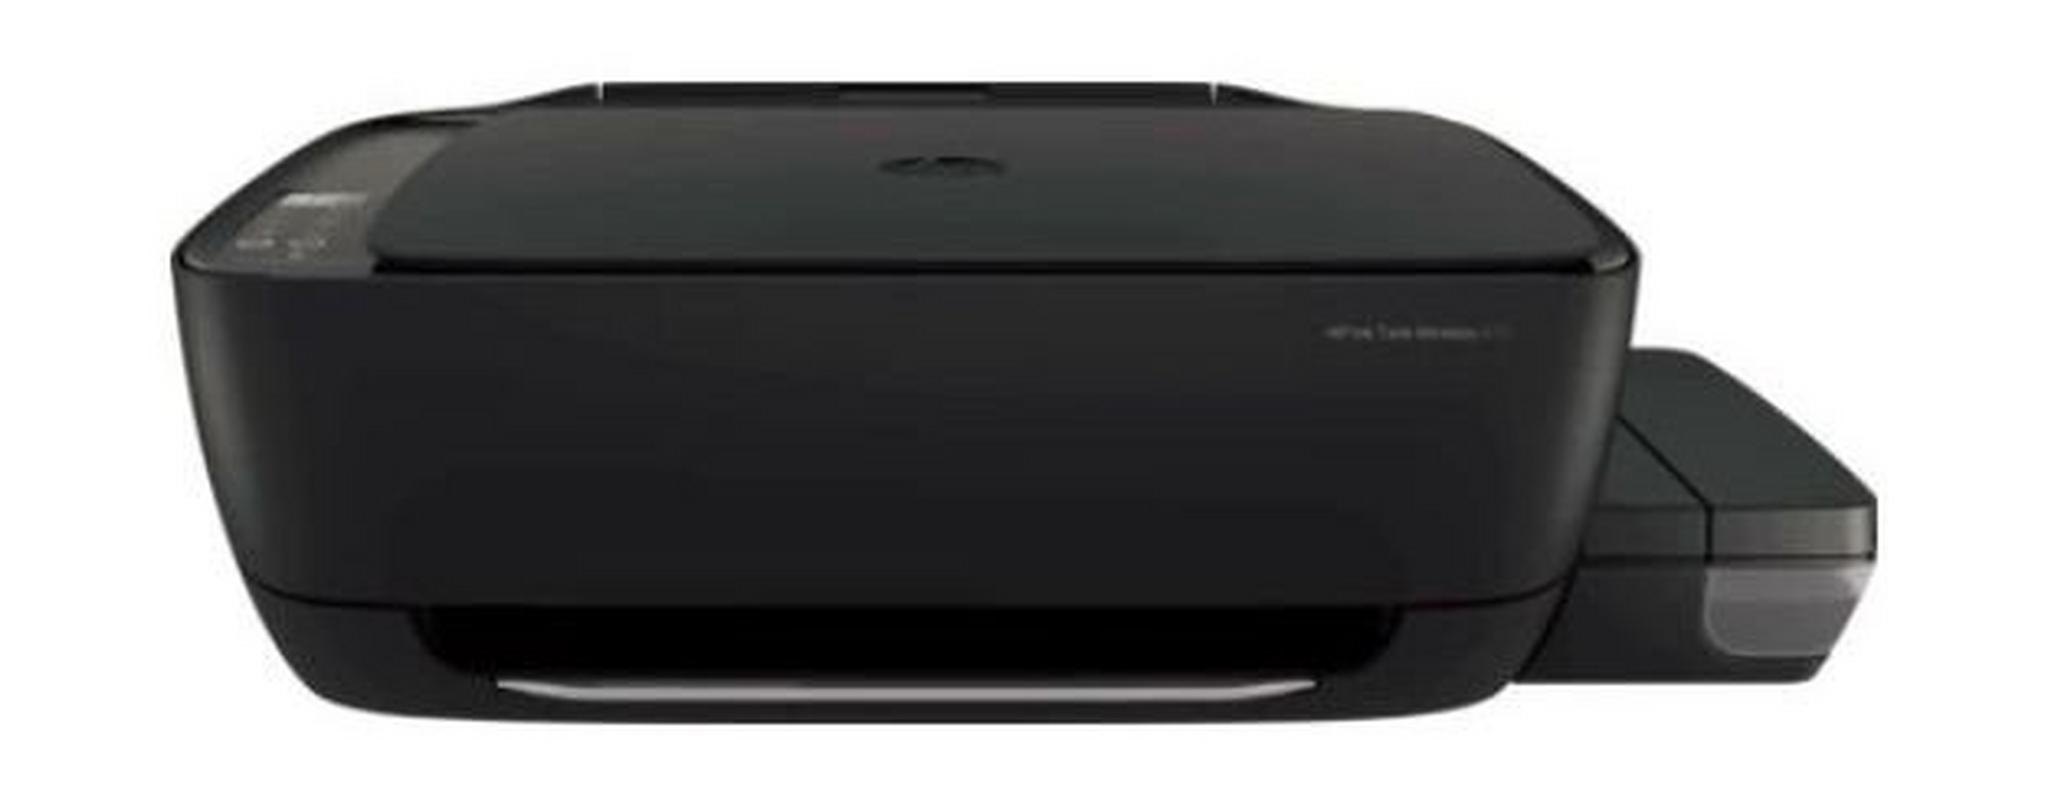 HP Ink Tank Wireless 415 All-in-one Printer- Black